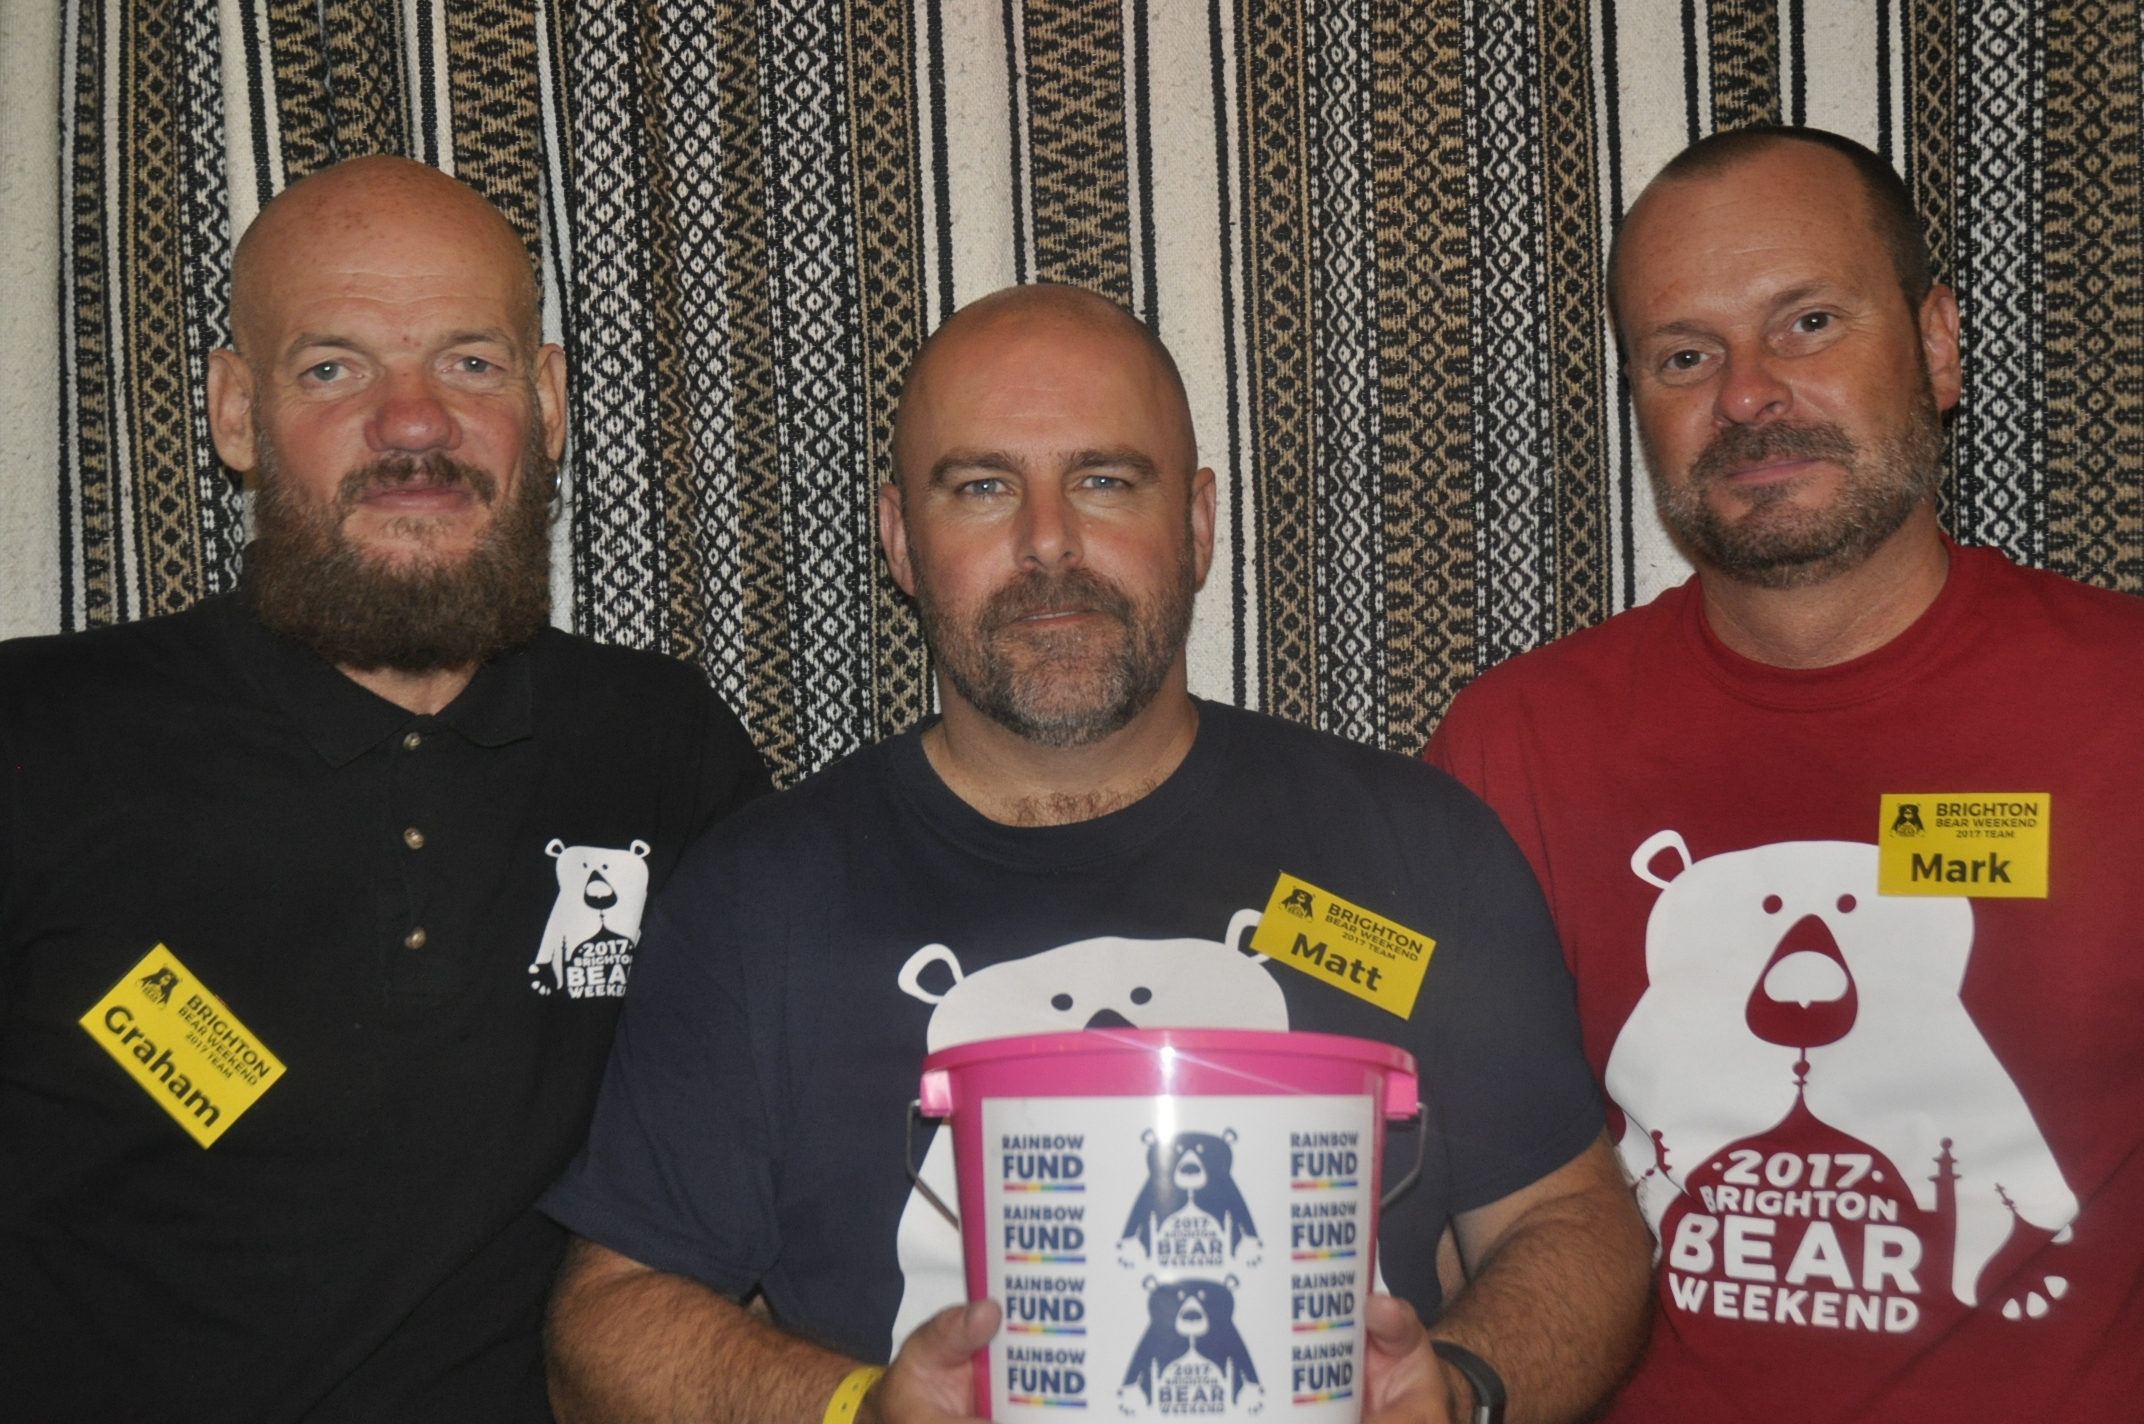 Brighton Bear Weekend quiz raises record amount for Rainbow Fund